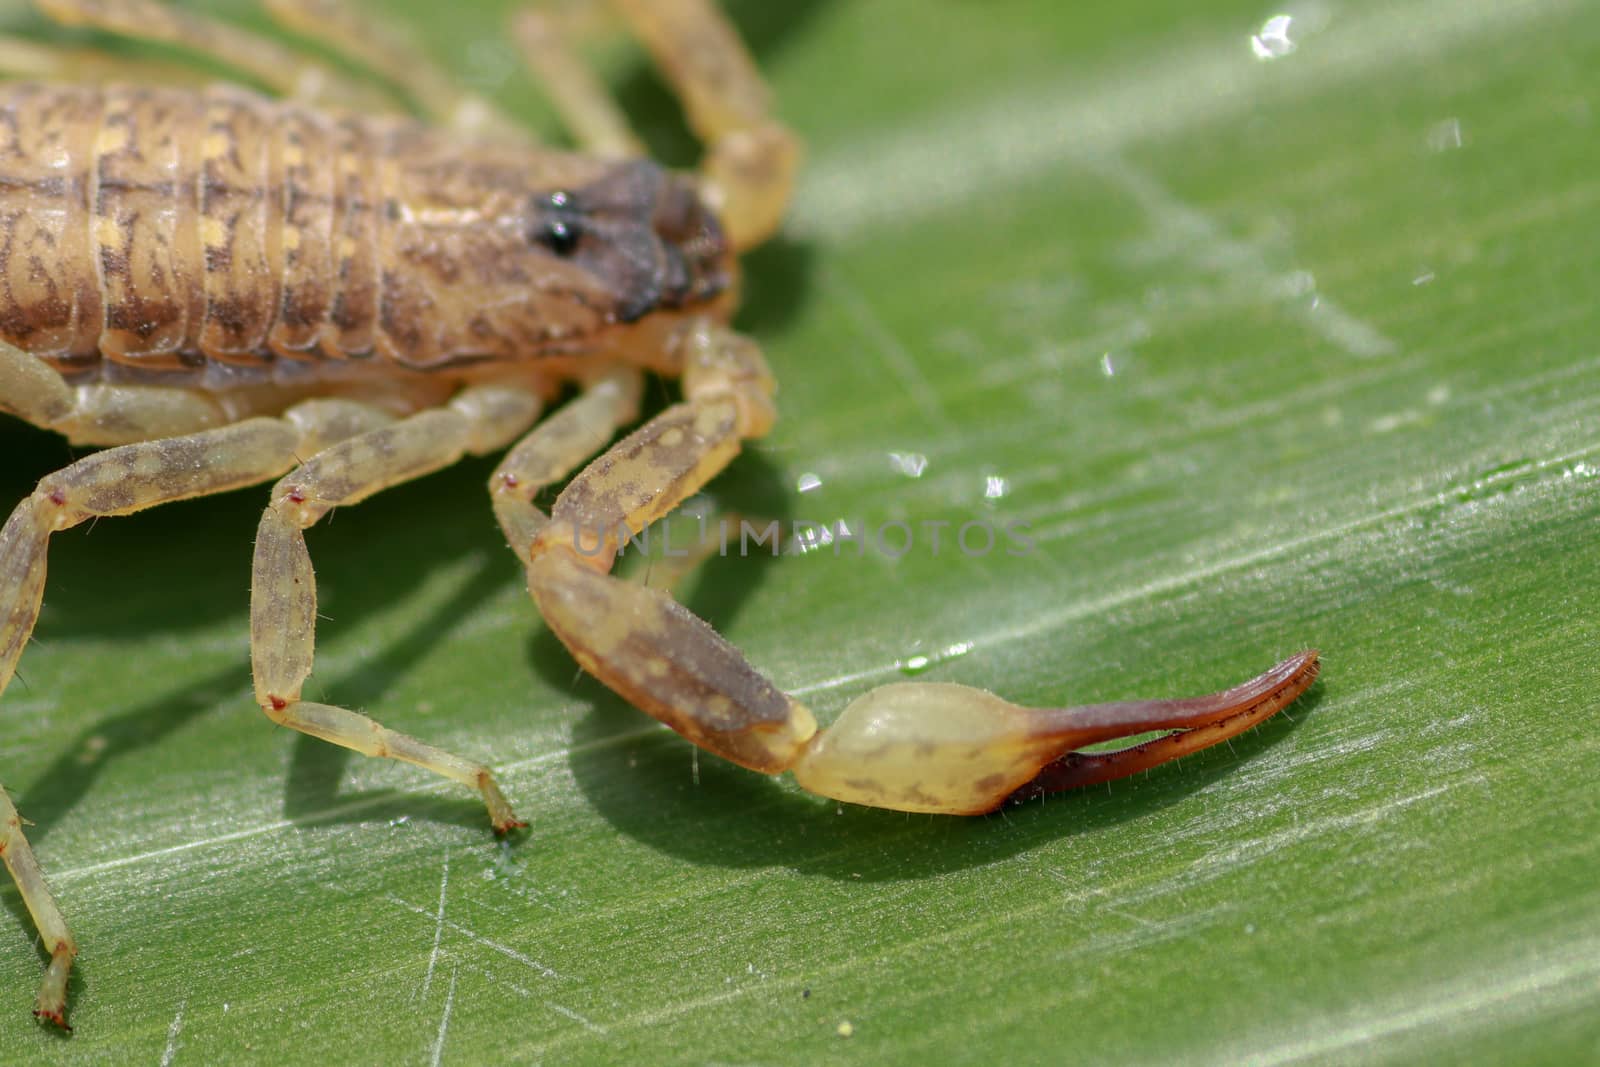 A scorpion pincer pedipalp up close. Leiurus hebraeus, the Hebrew deathstalker or Israeli yellow scorpion.